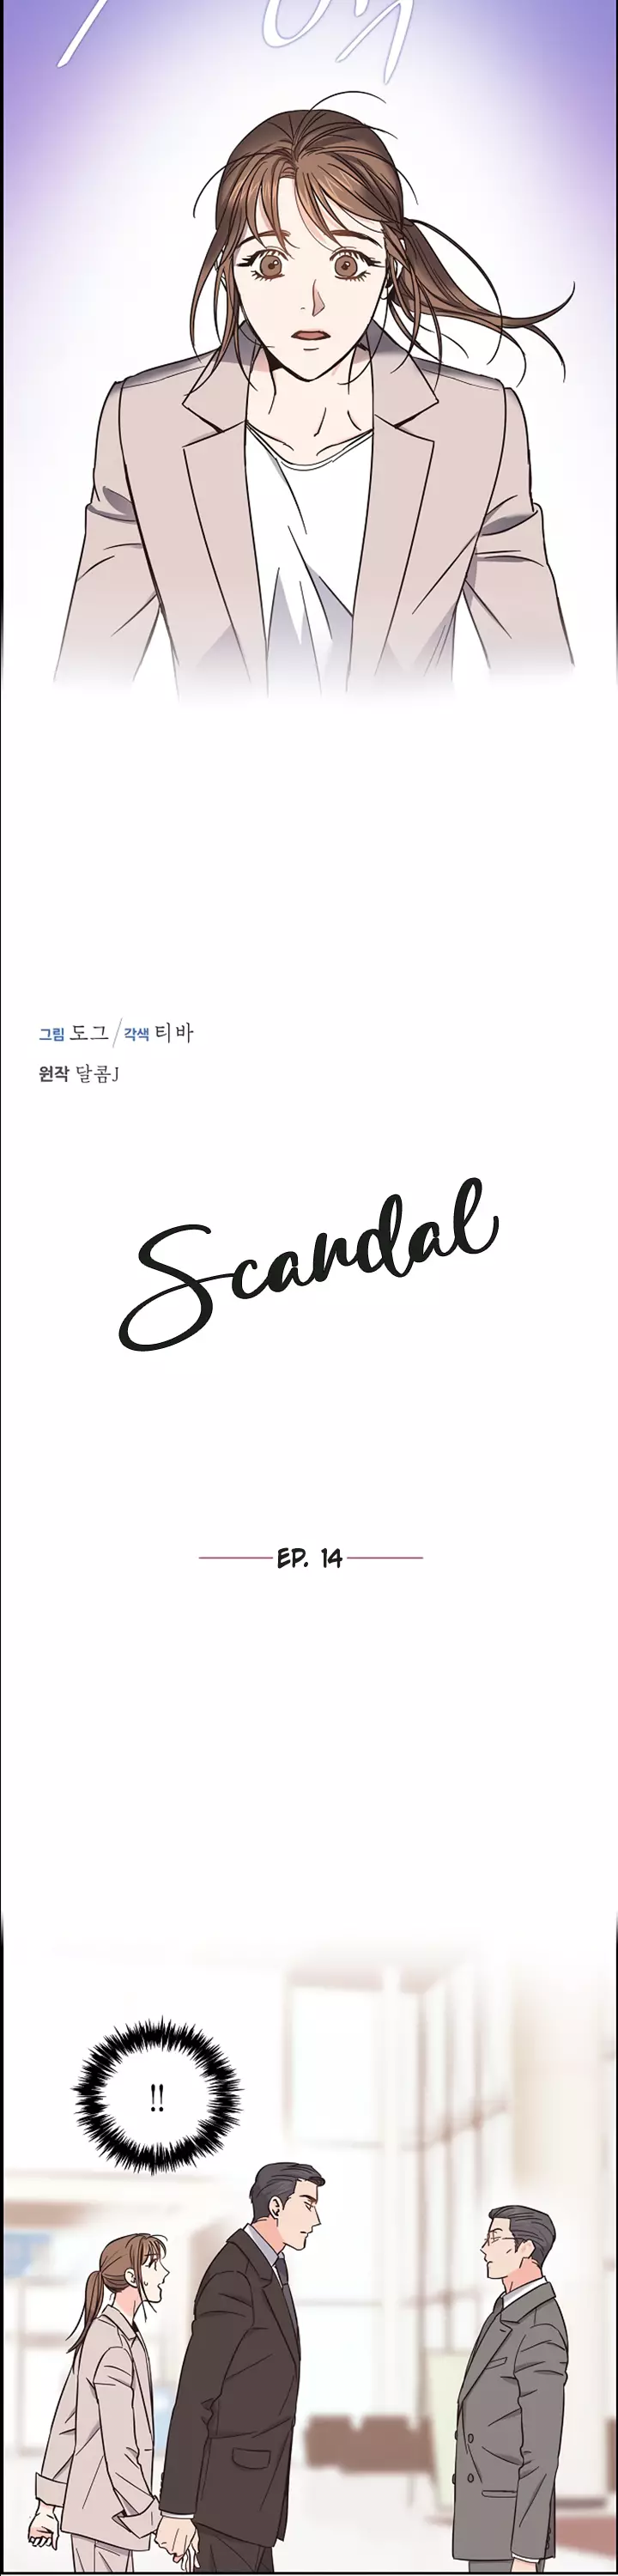 Scandal - 14 page 5-1ed29ab9